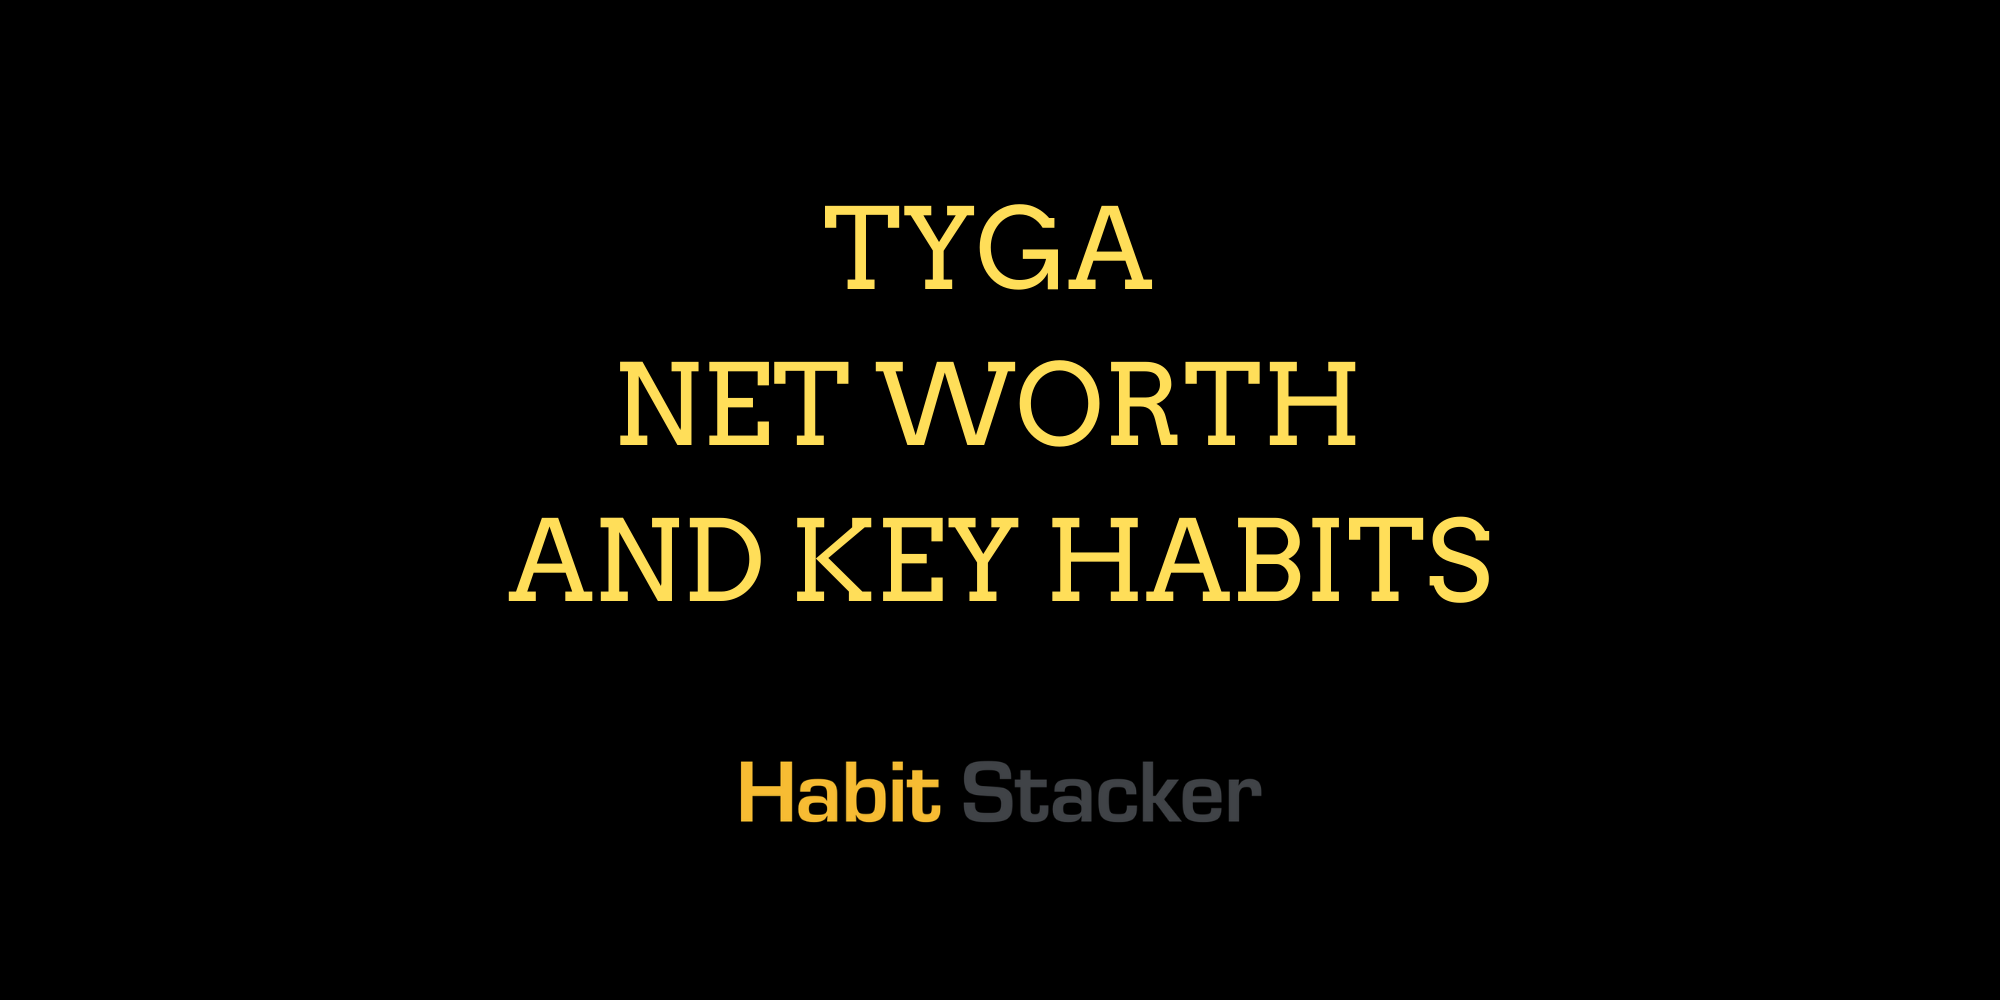 Tyga Net Worth and Key Habits